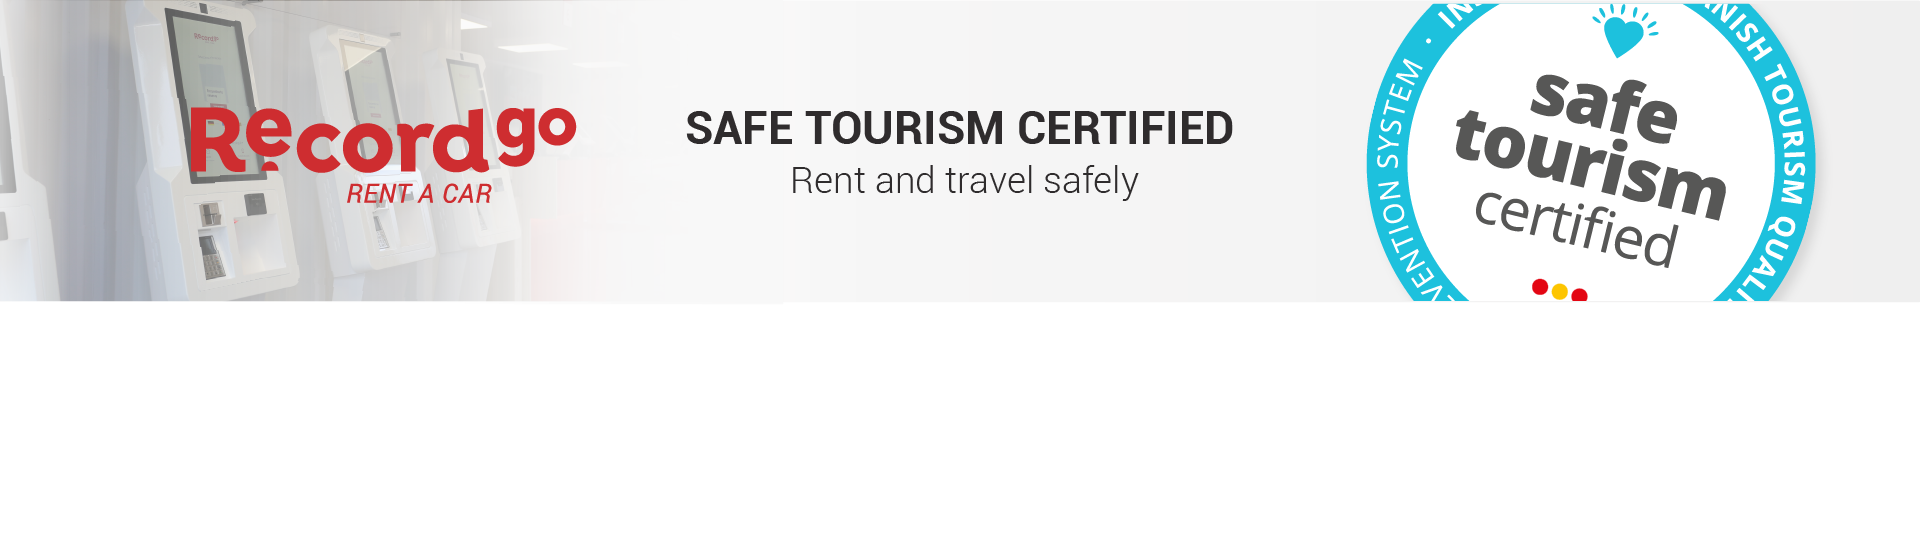 “Safe Tourism Certified” seal